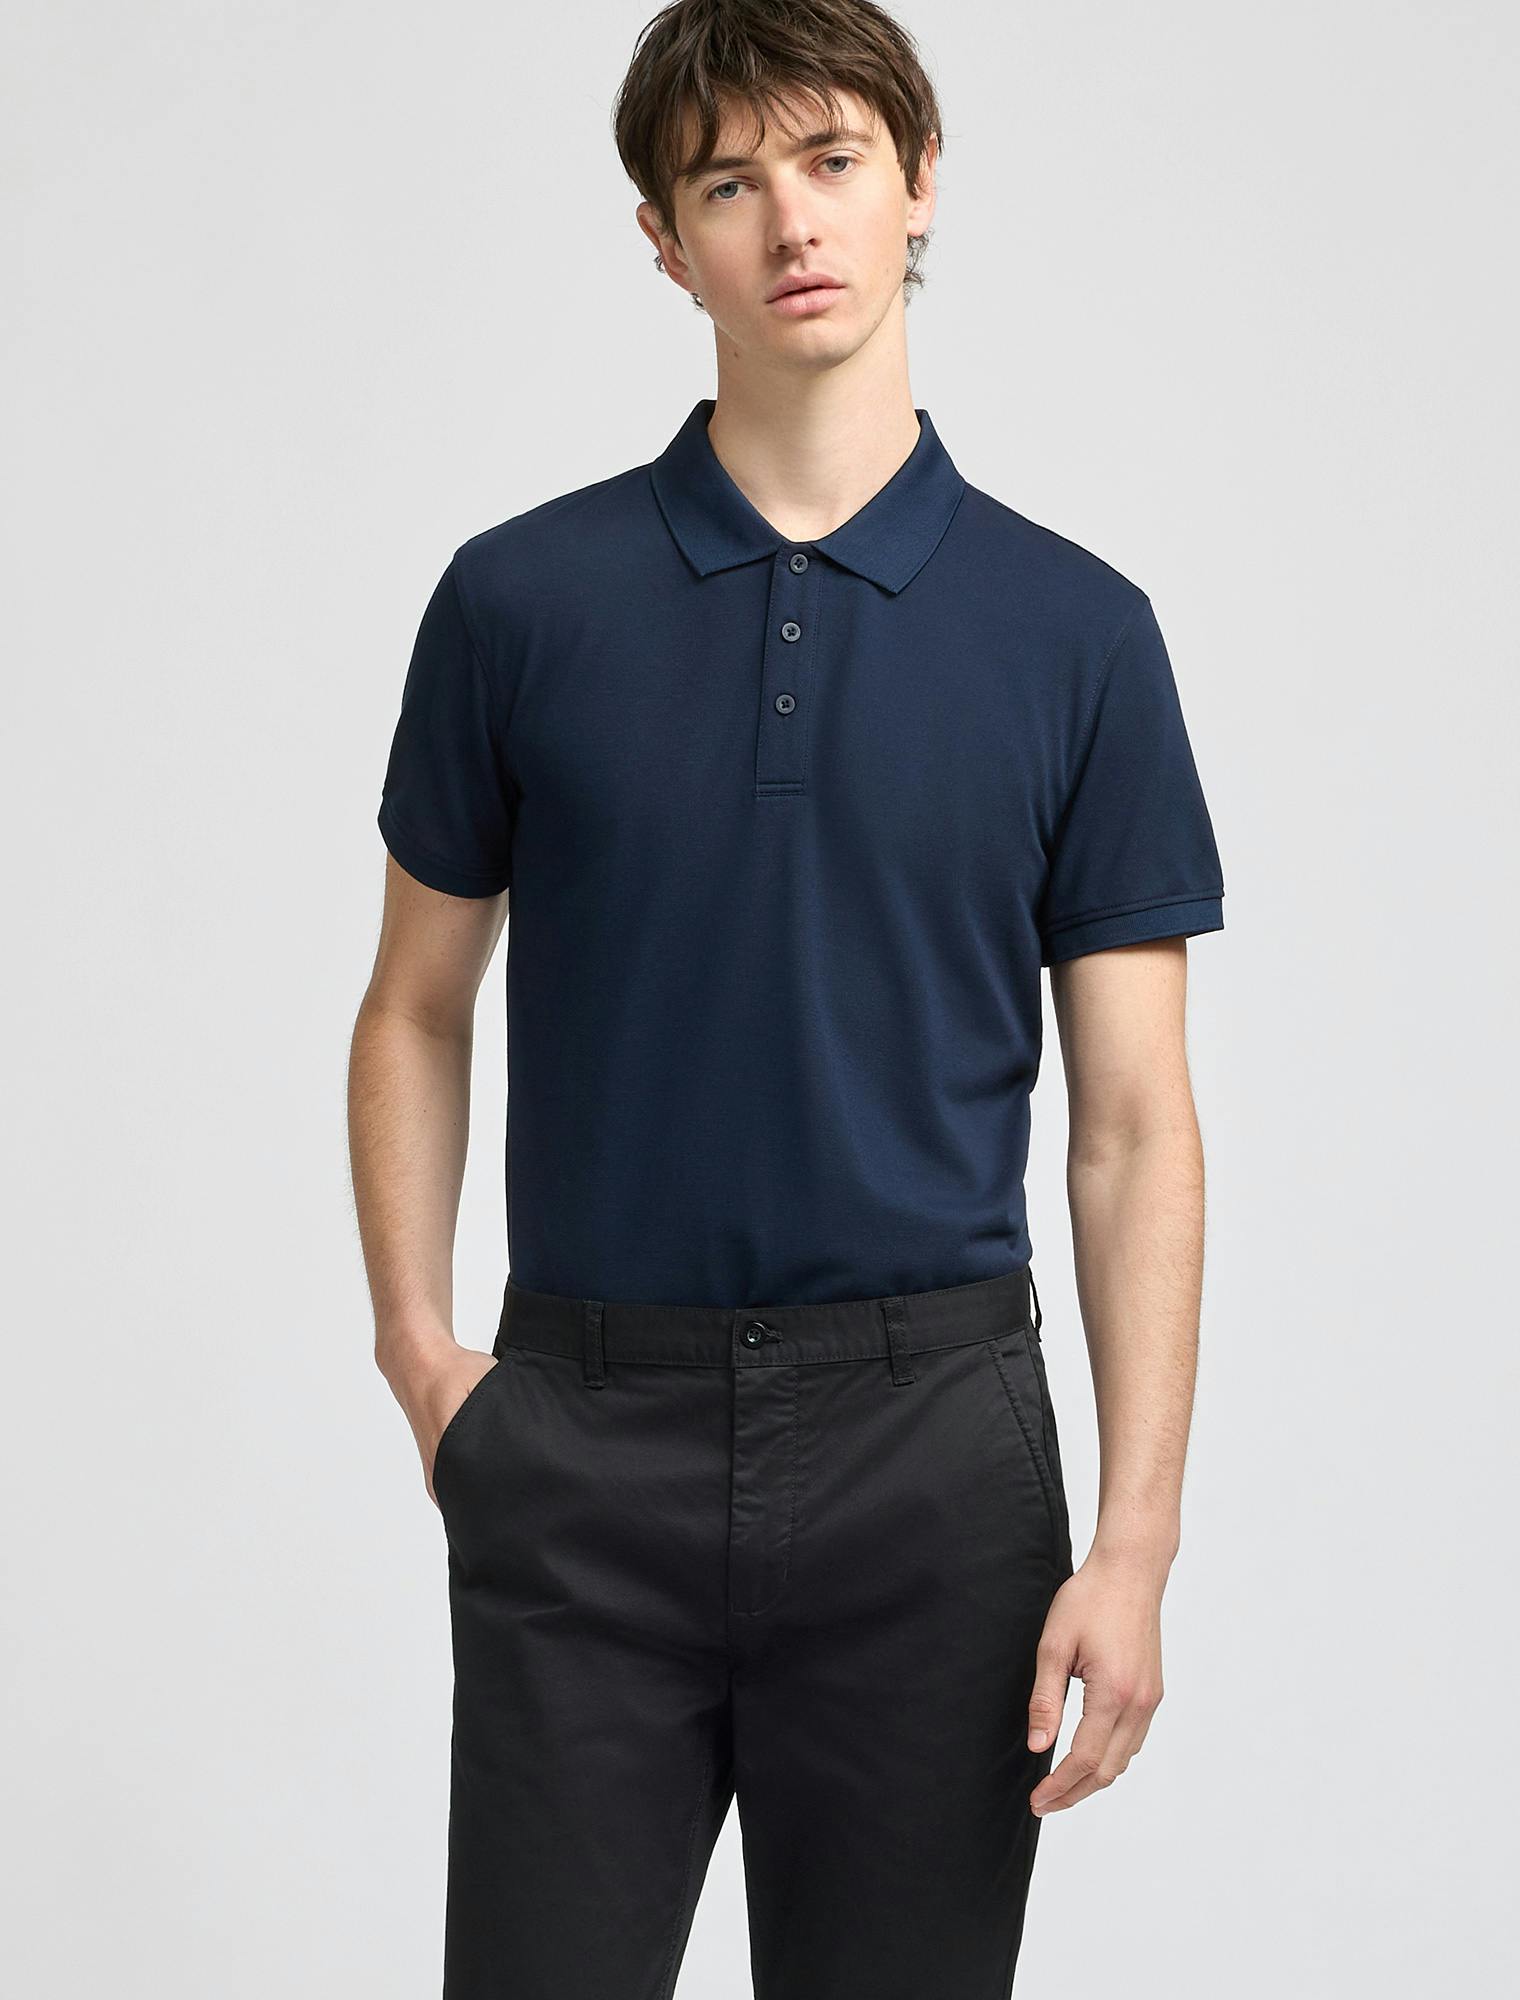 Men's Parker Polo Shirt - Navy Blue